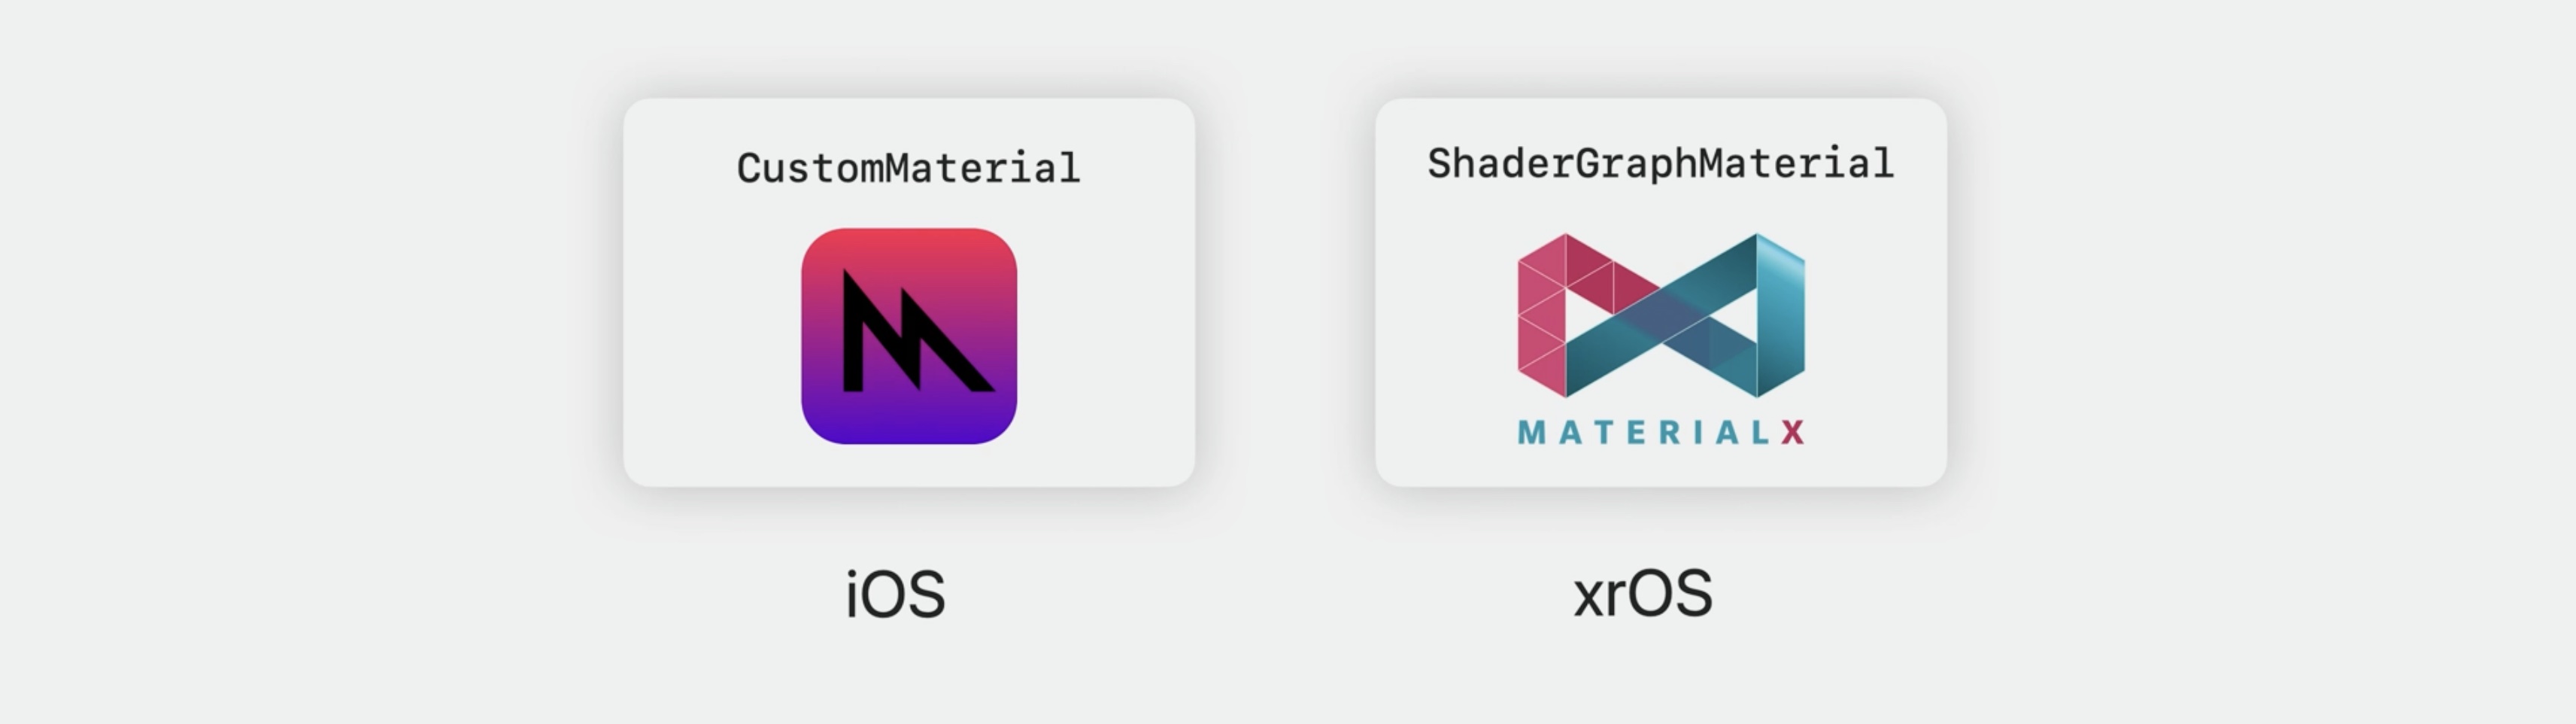 shaderGraphMaterial